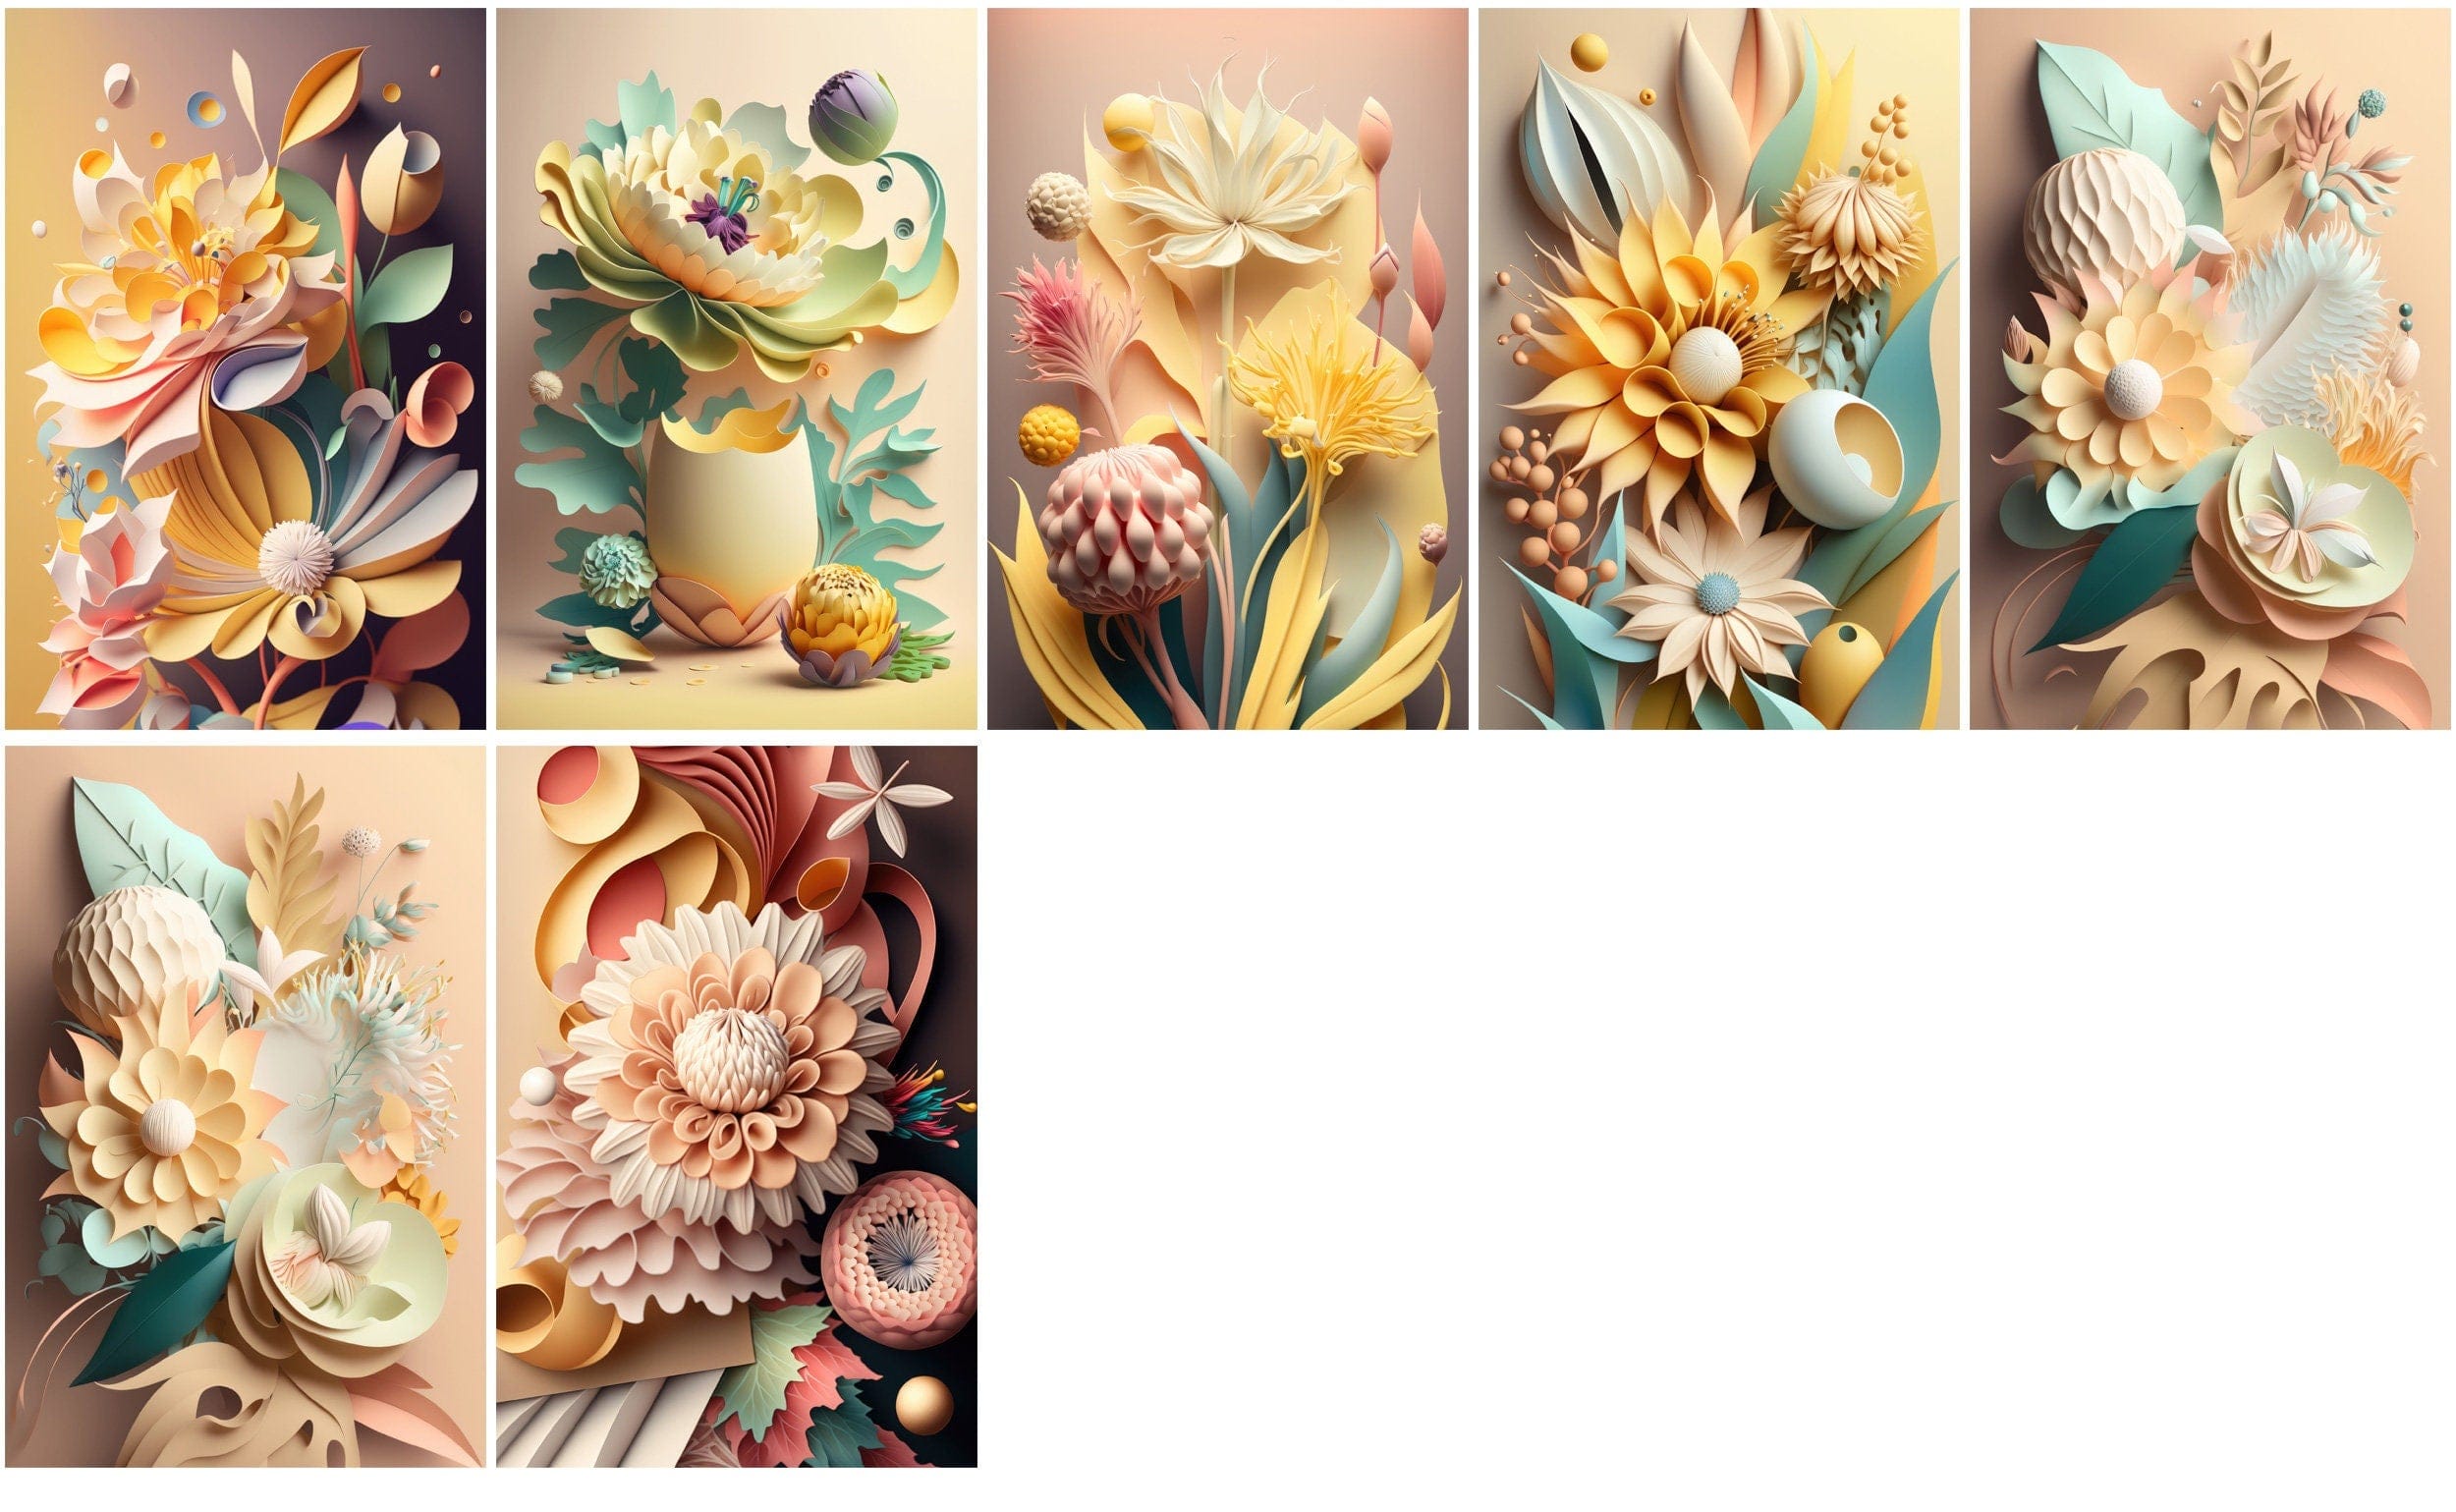 3D Pastel Floral Image Bundle, 85 Printable Artworks, Canvas Wall Art, iPhone Wallpaper, Digital Download Digital Download Sumobundle